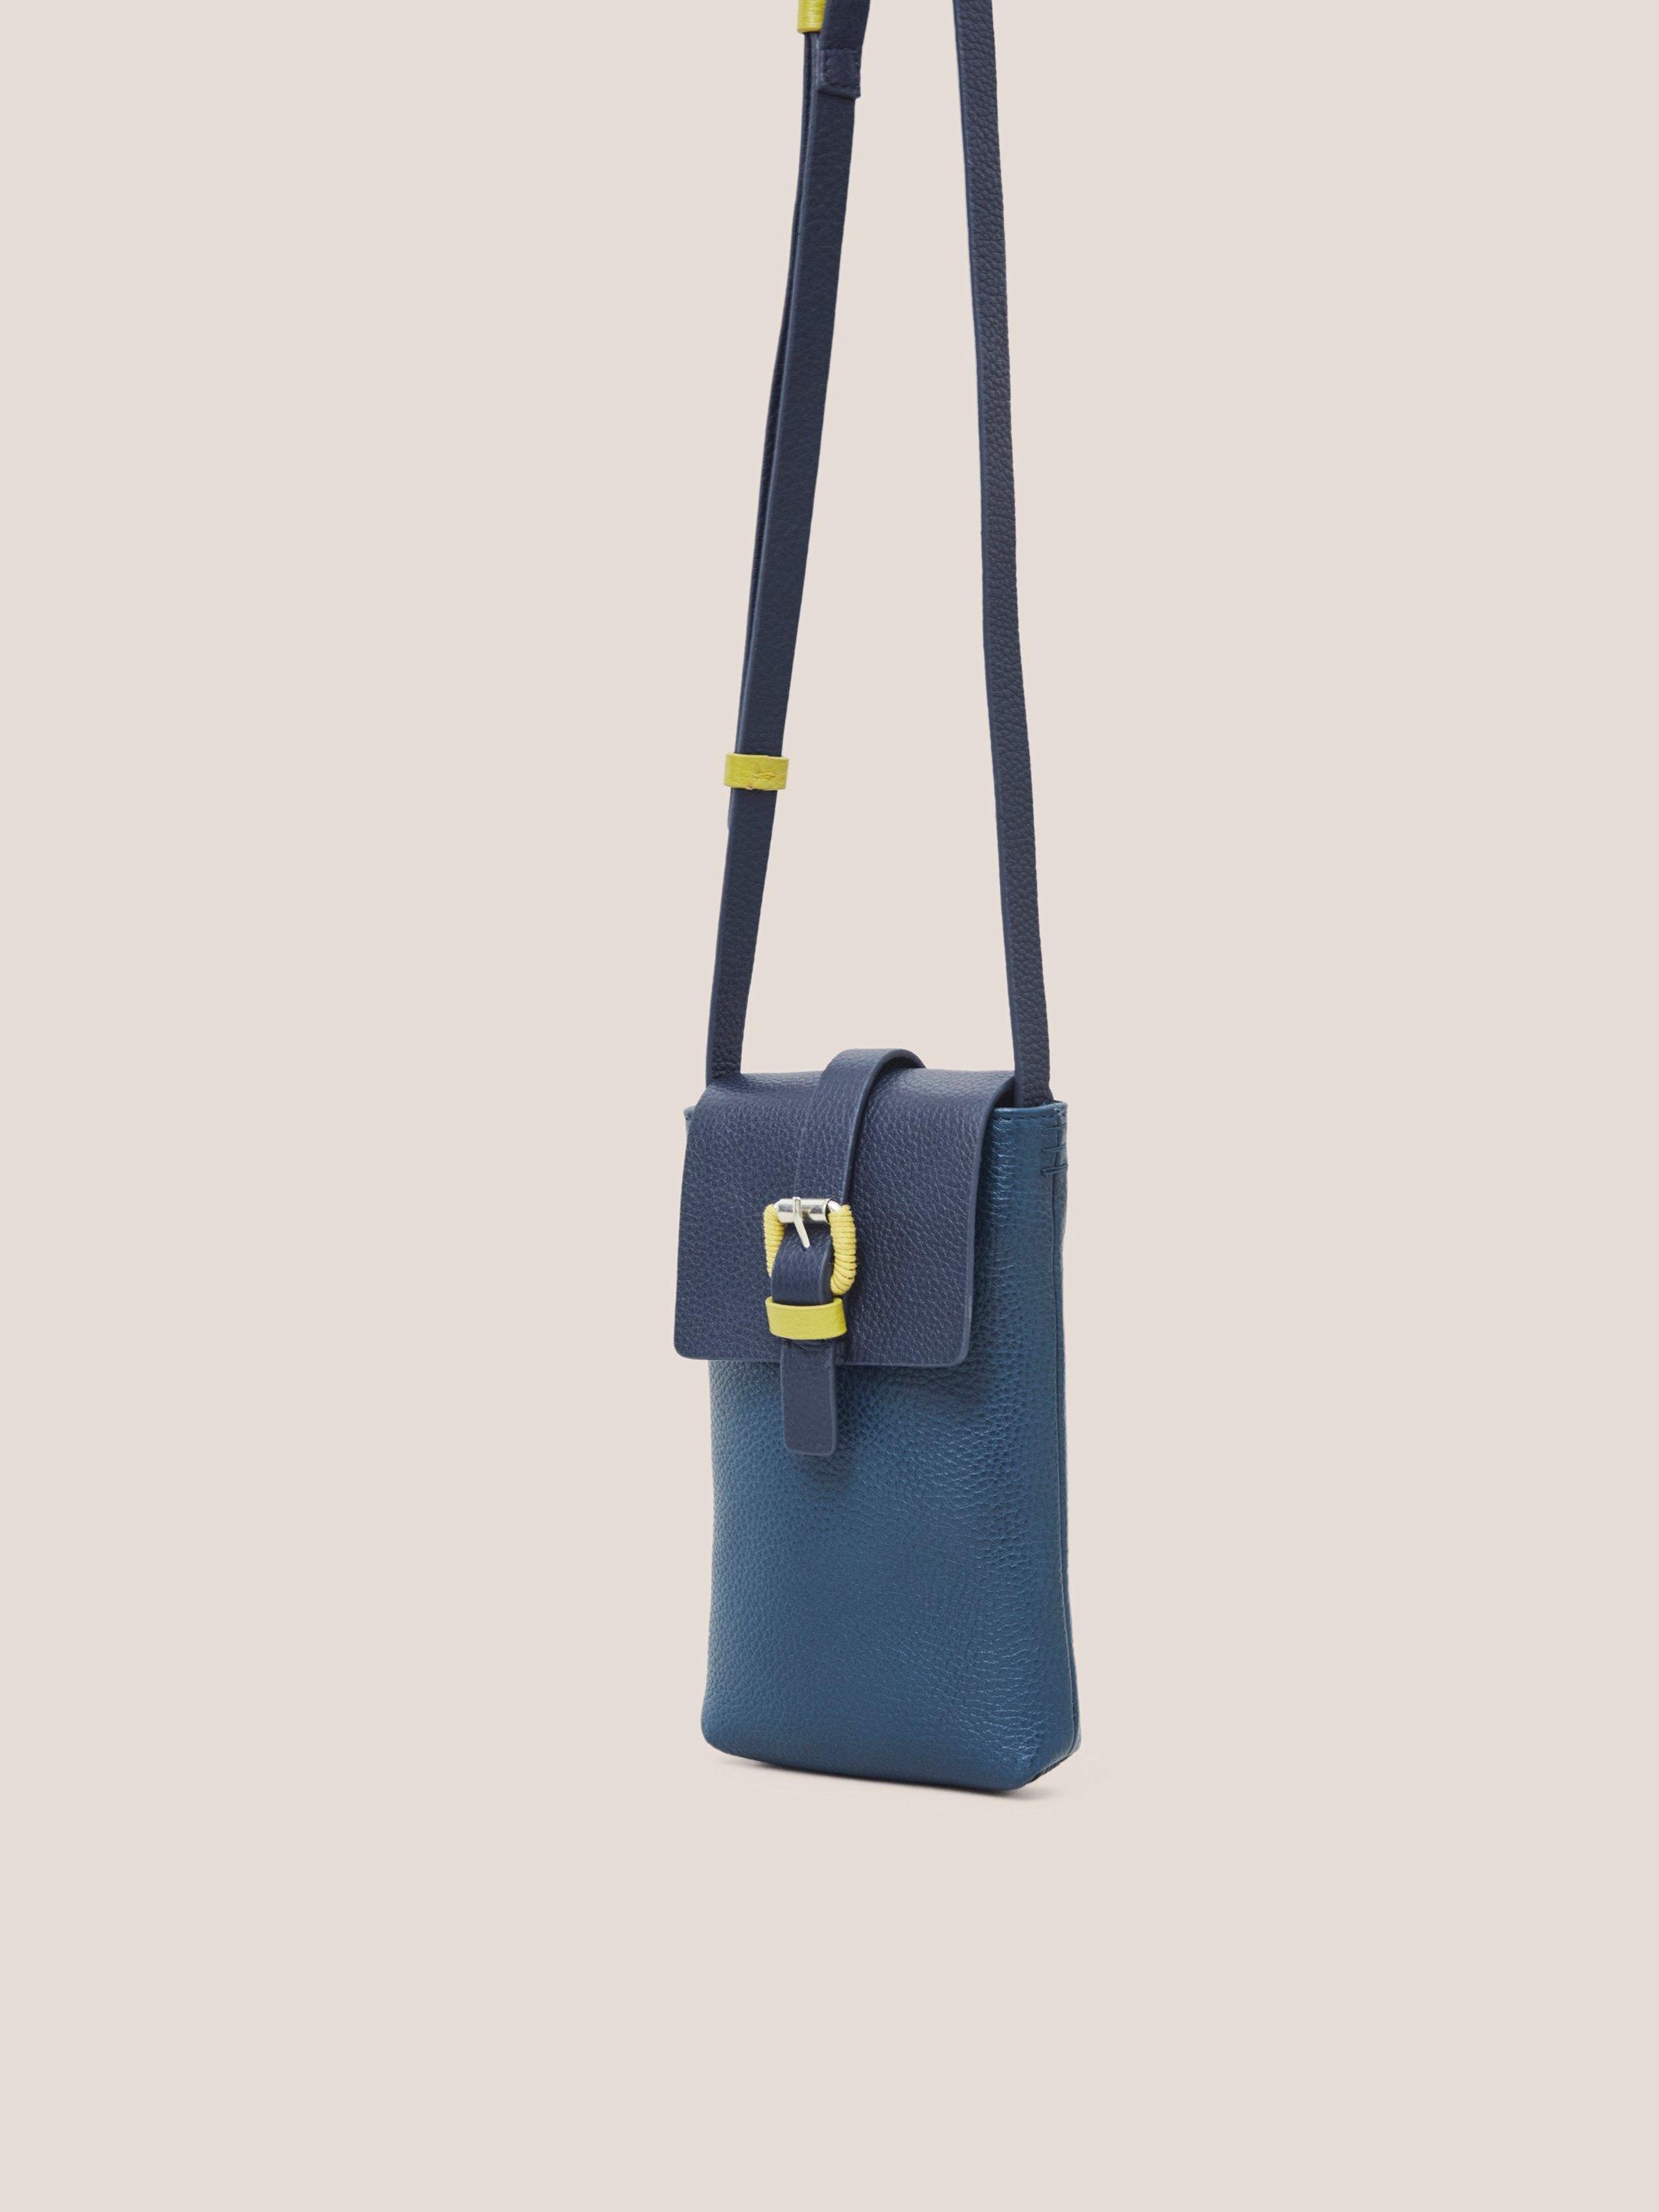 Clara Buckle Leather Phone Bag in DARK NAVY - FLAT DETAIL